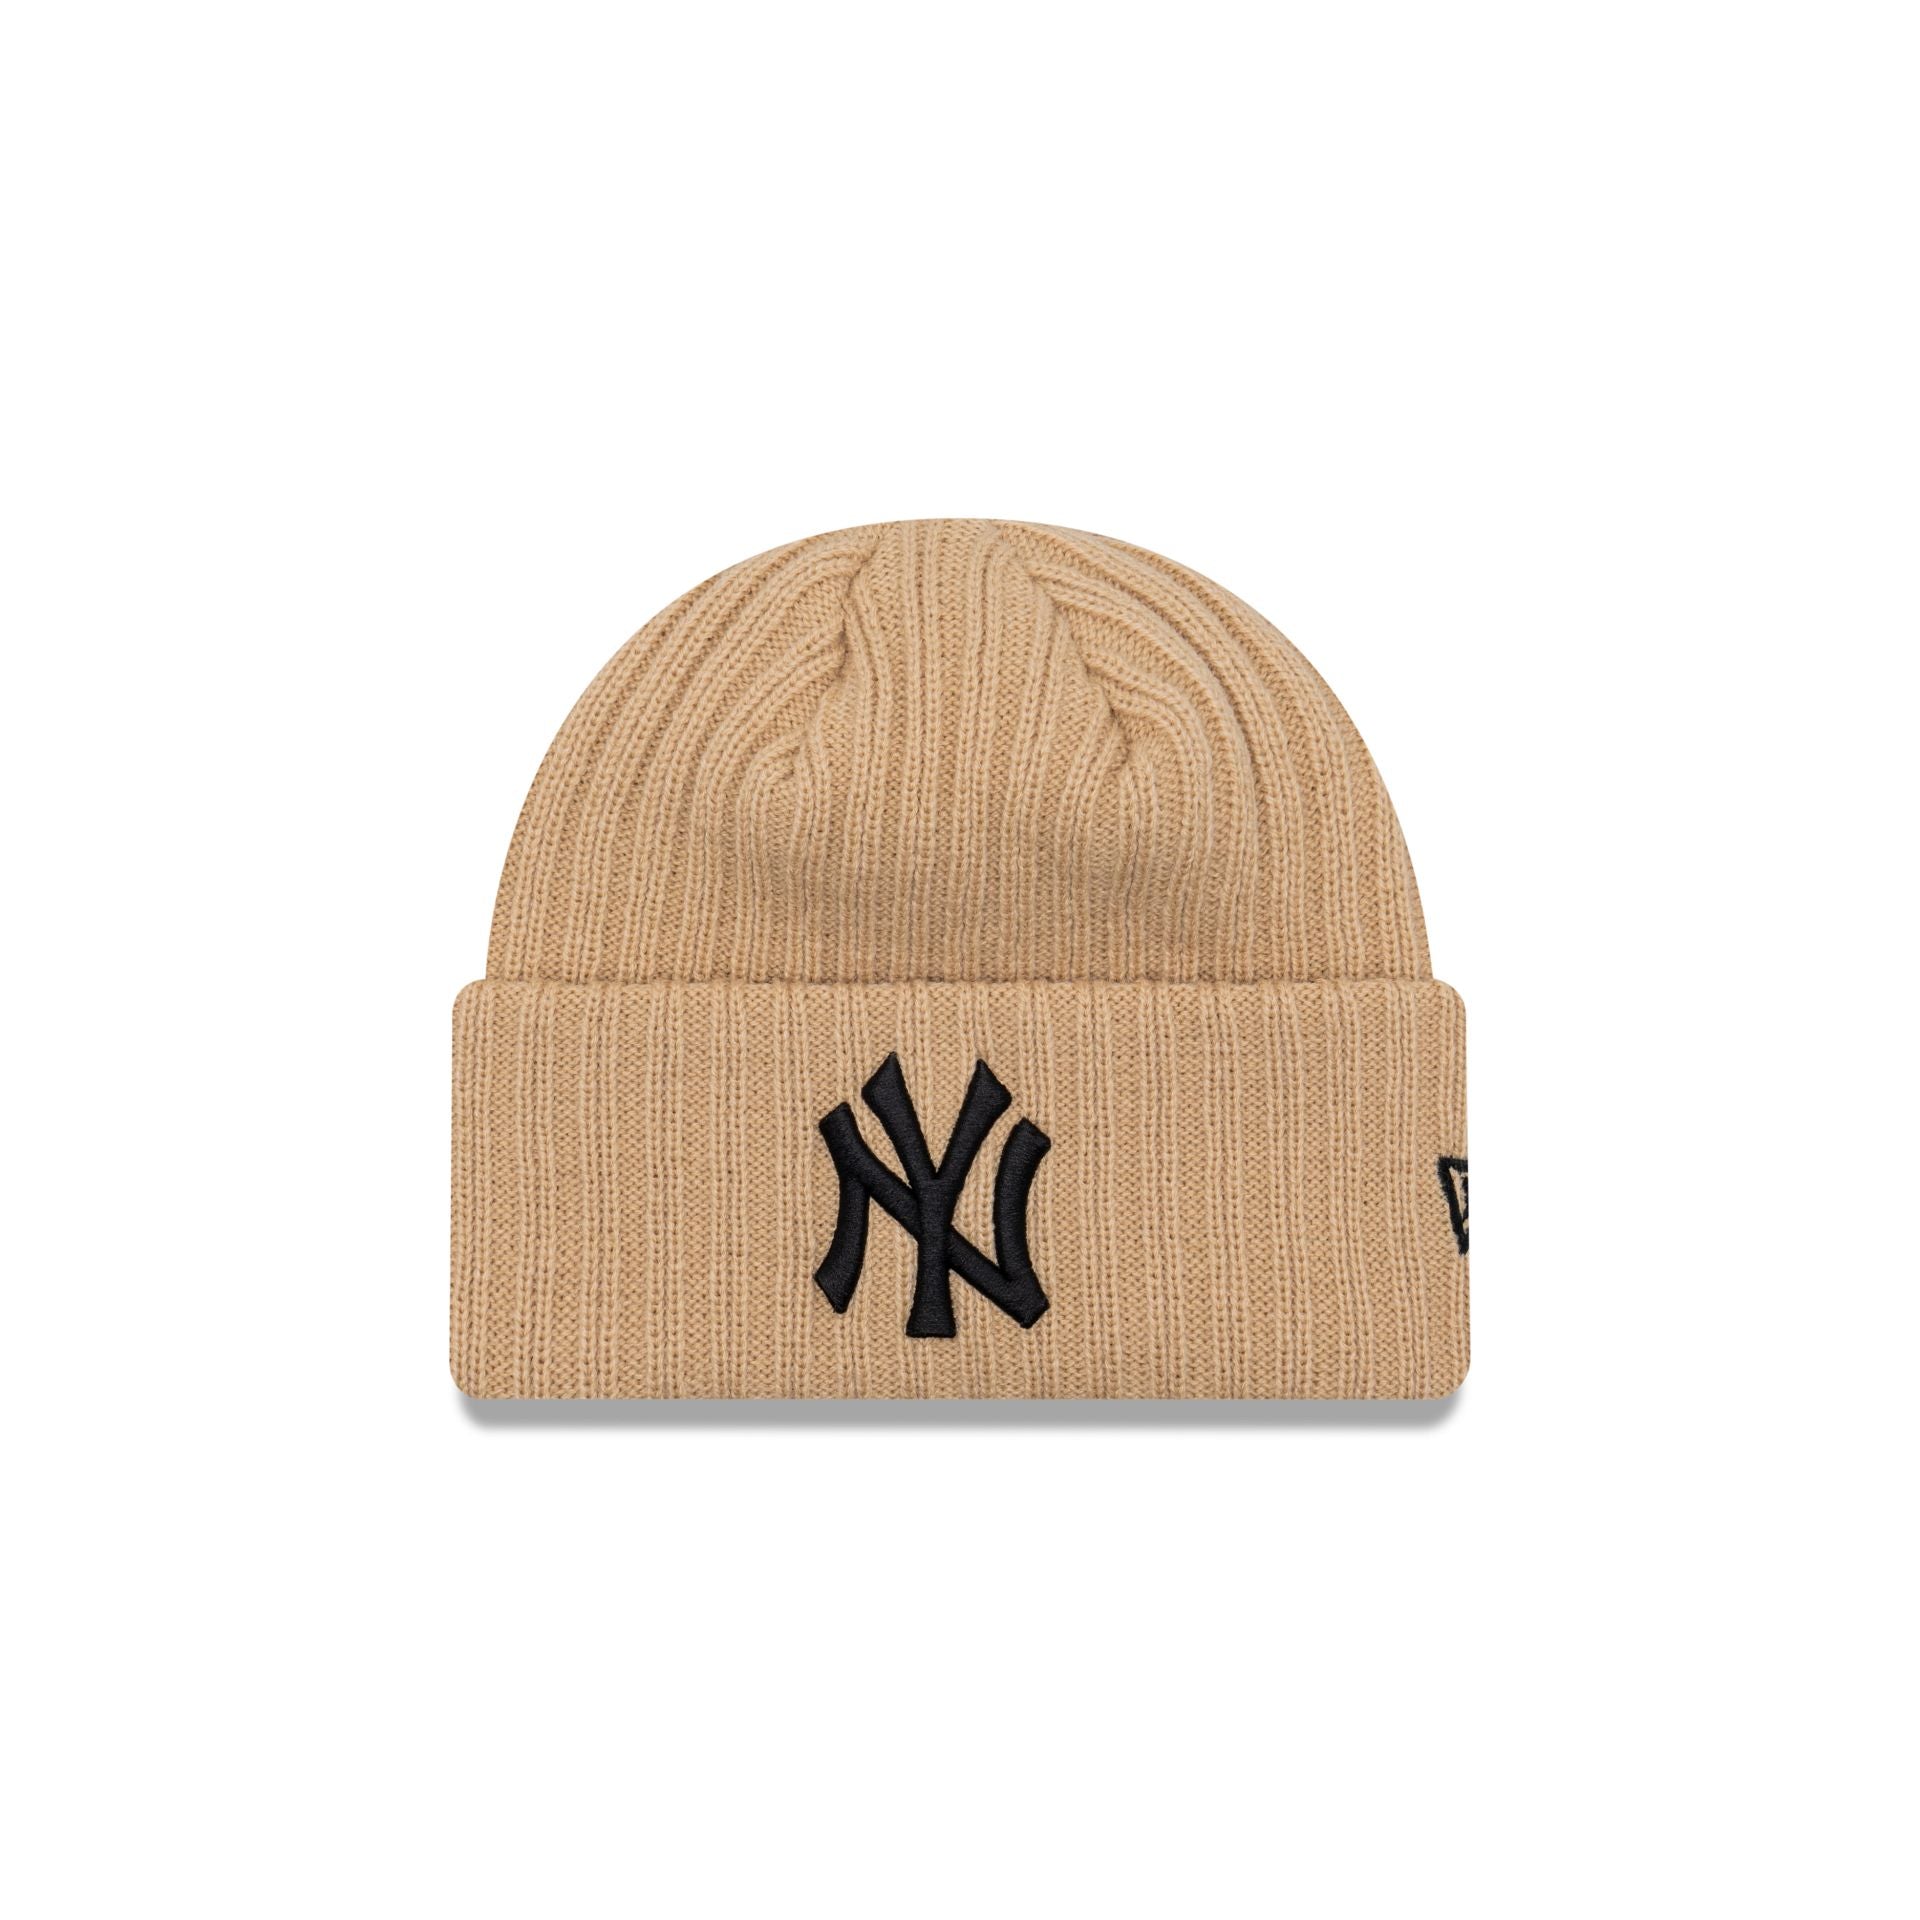 New York Yankees Hats, Caps and Clothing | New Era Cap Australia